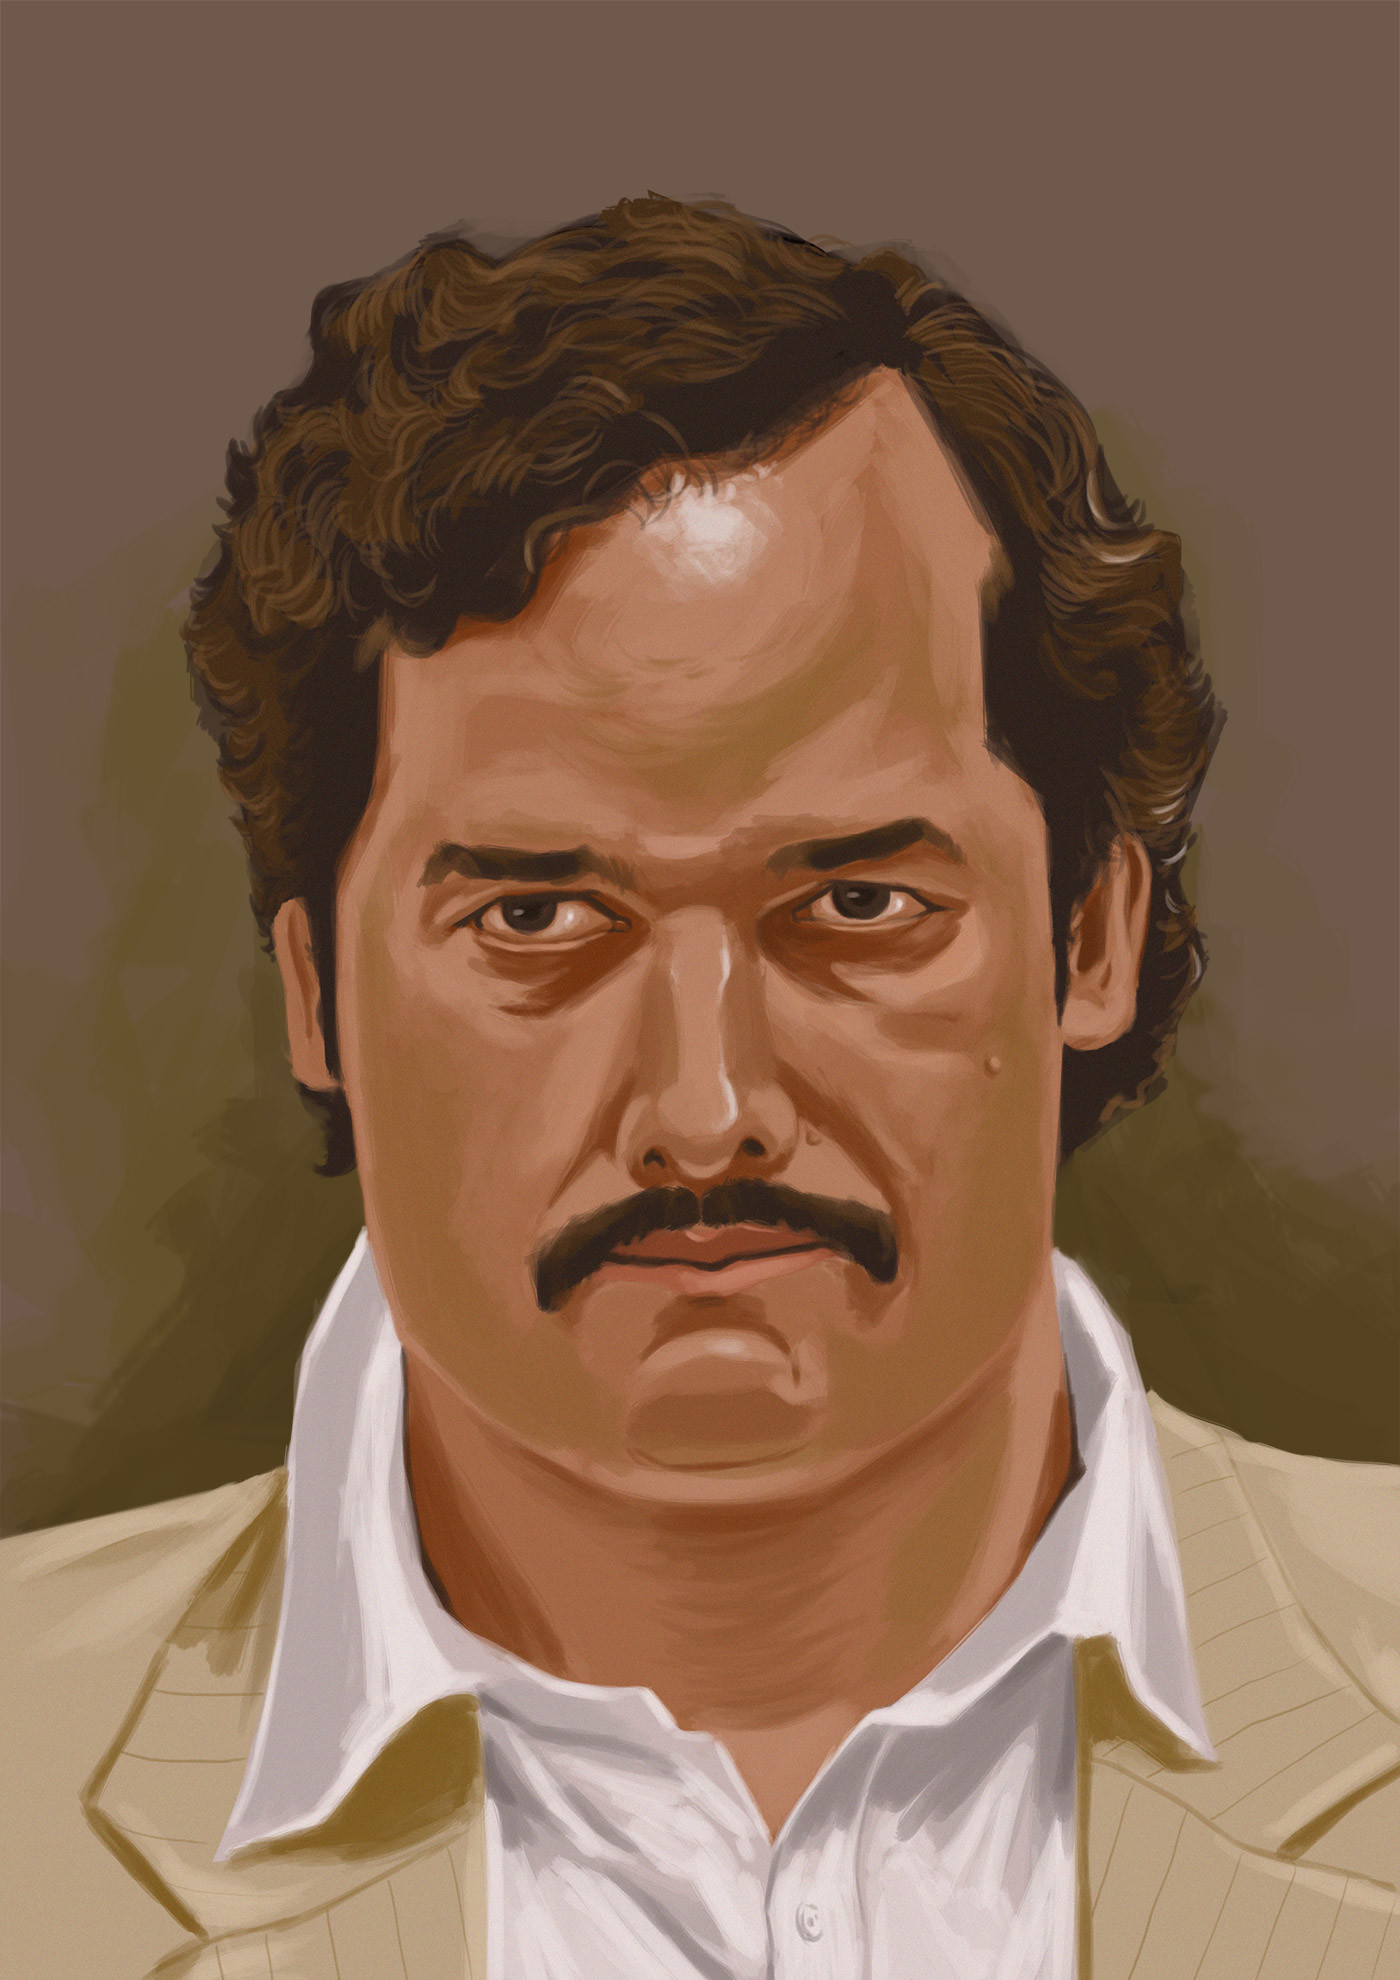 ArtStation - Wagner Moura as Pablo Escobar